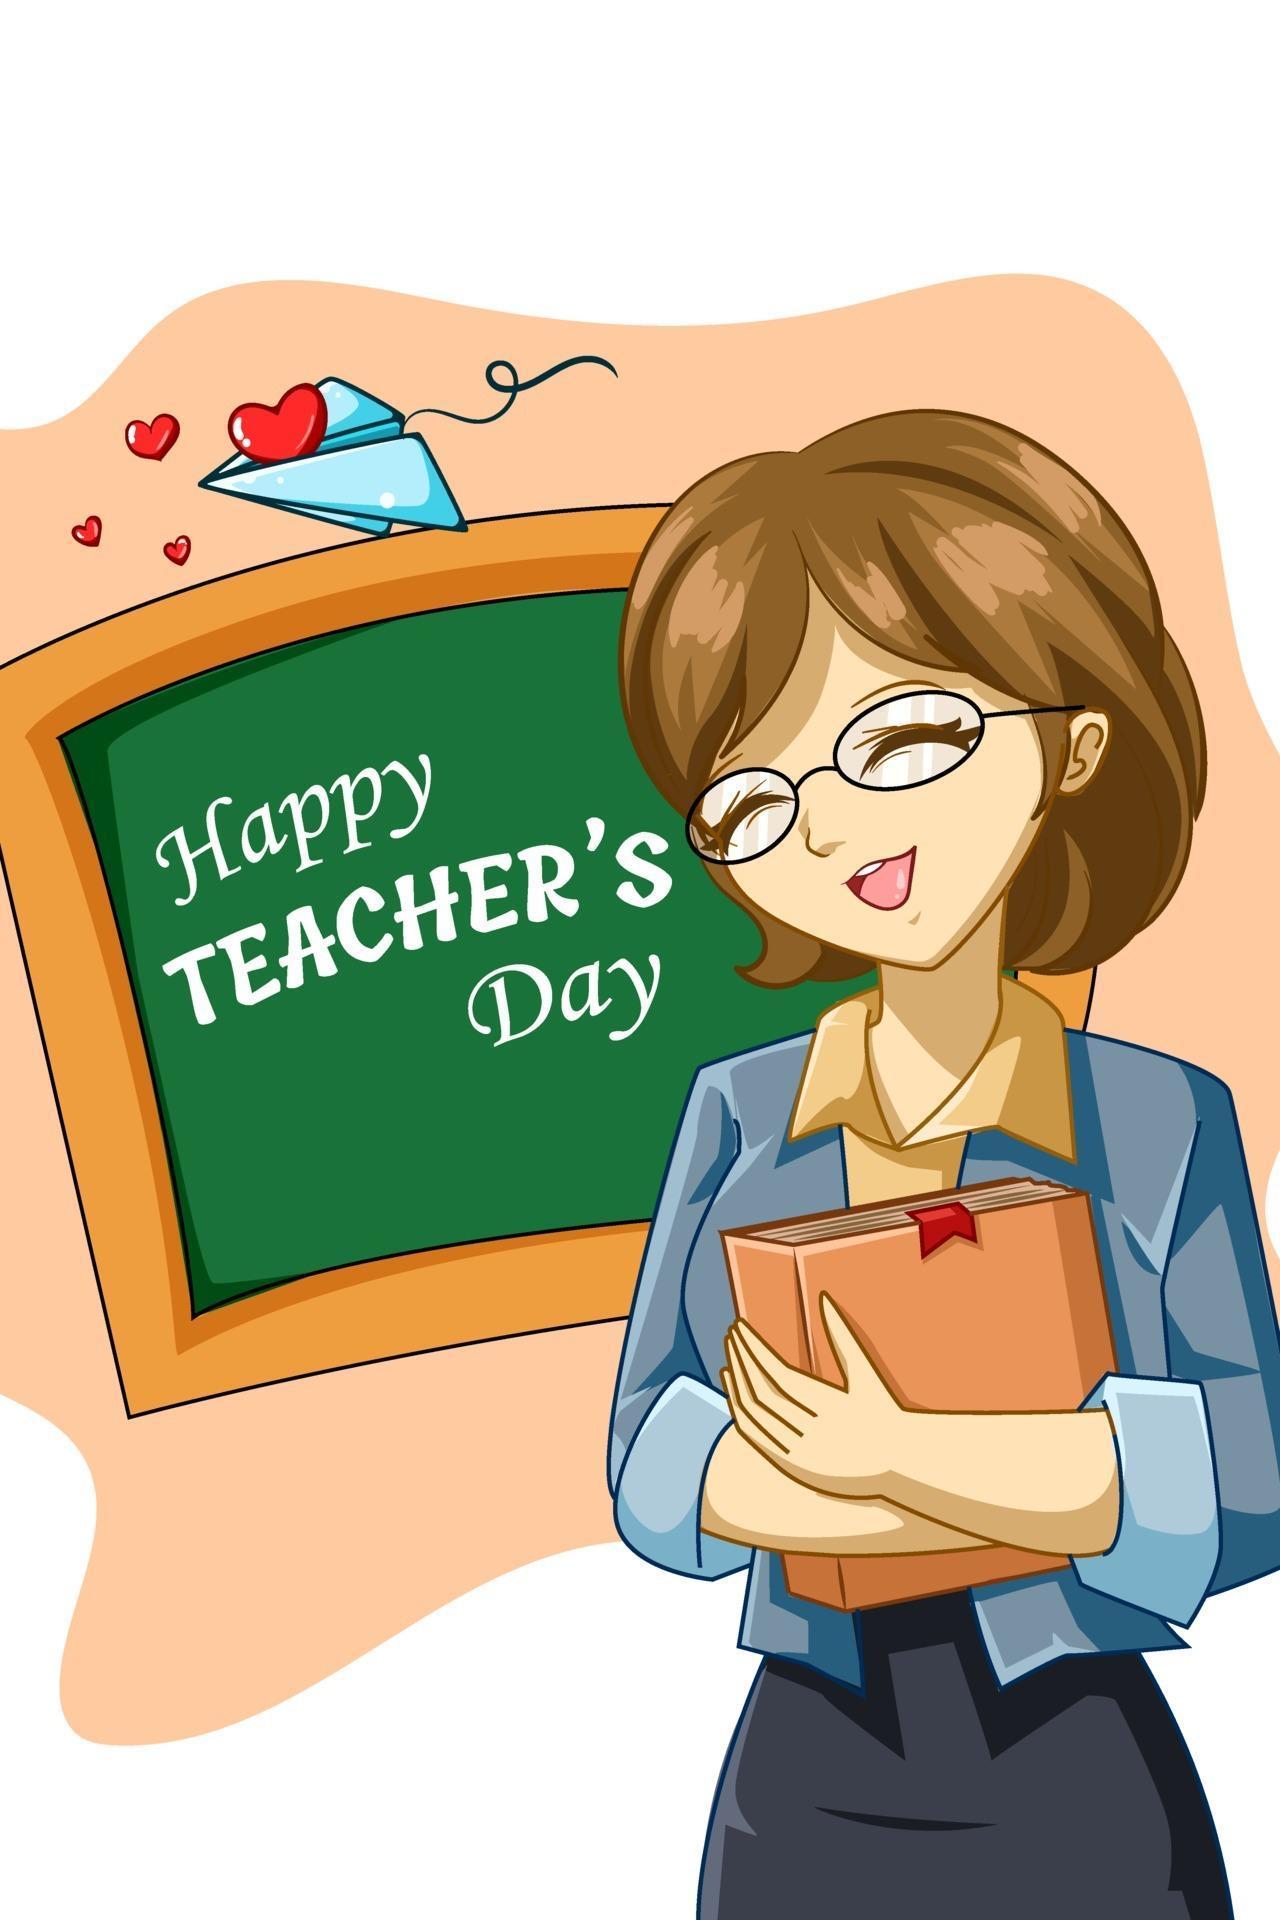 Design character of happy teacher's day cartoon illustration 3227052